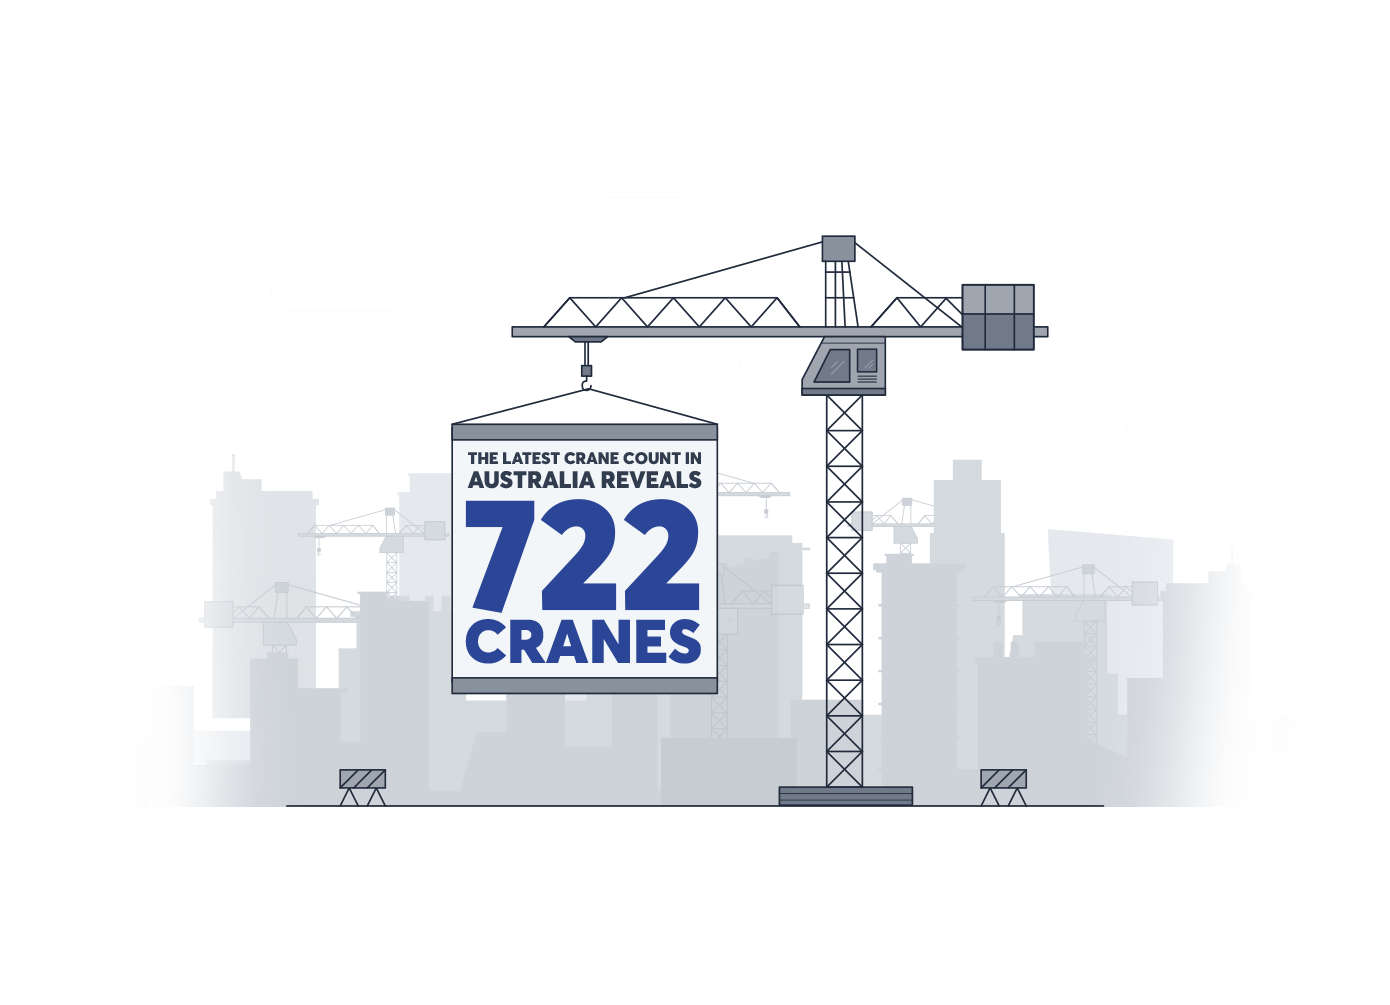 Australia's total crane count